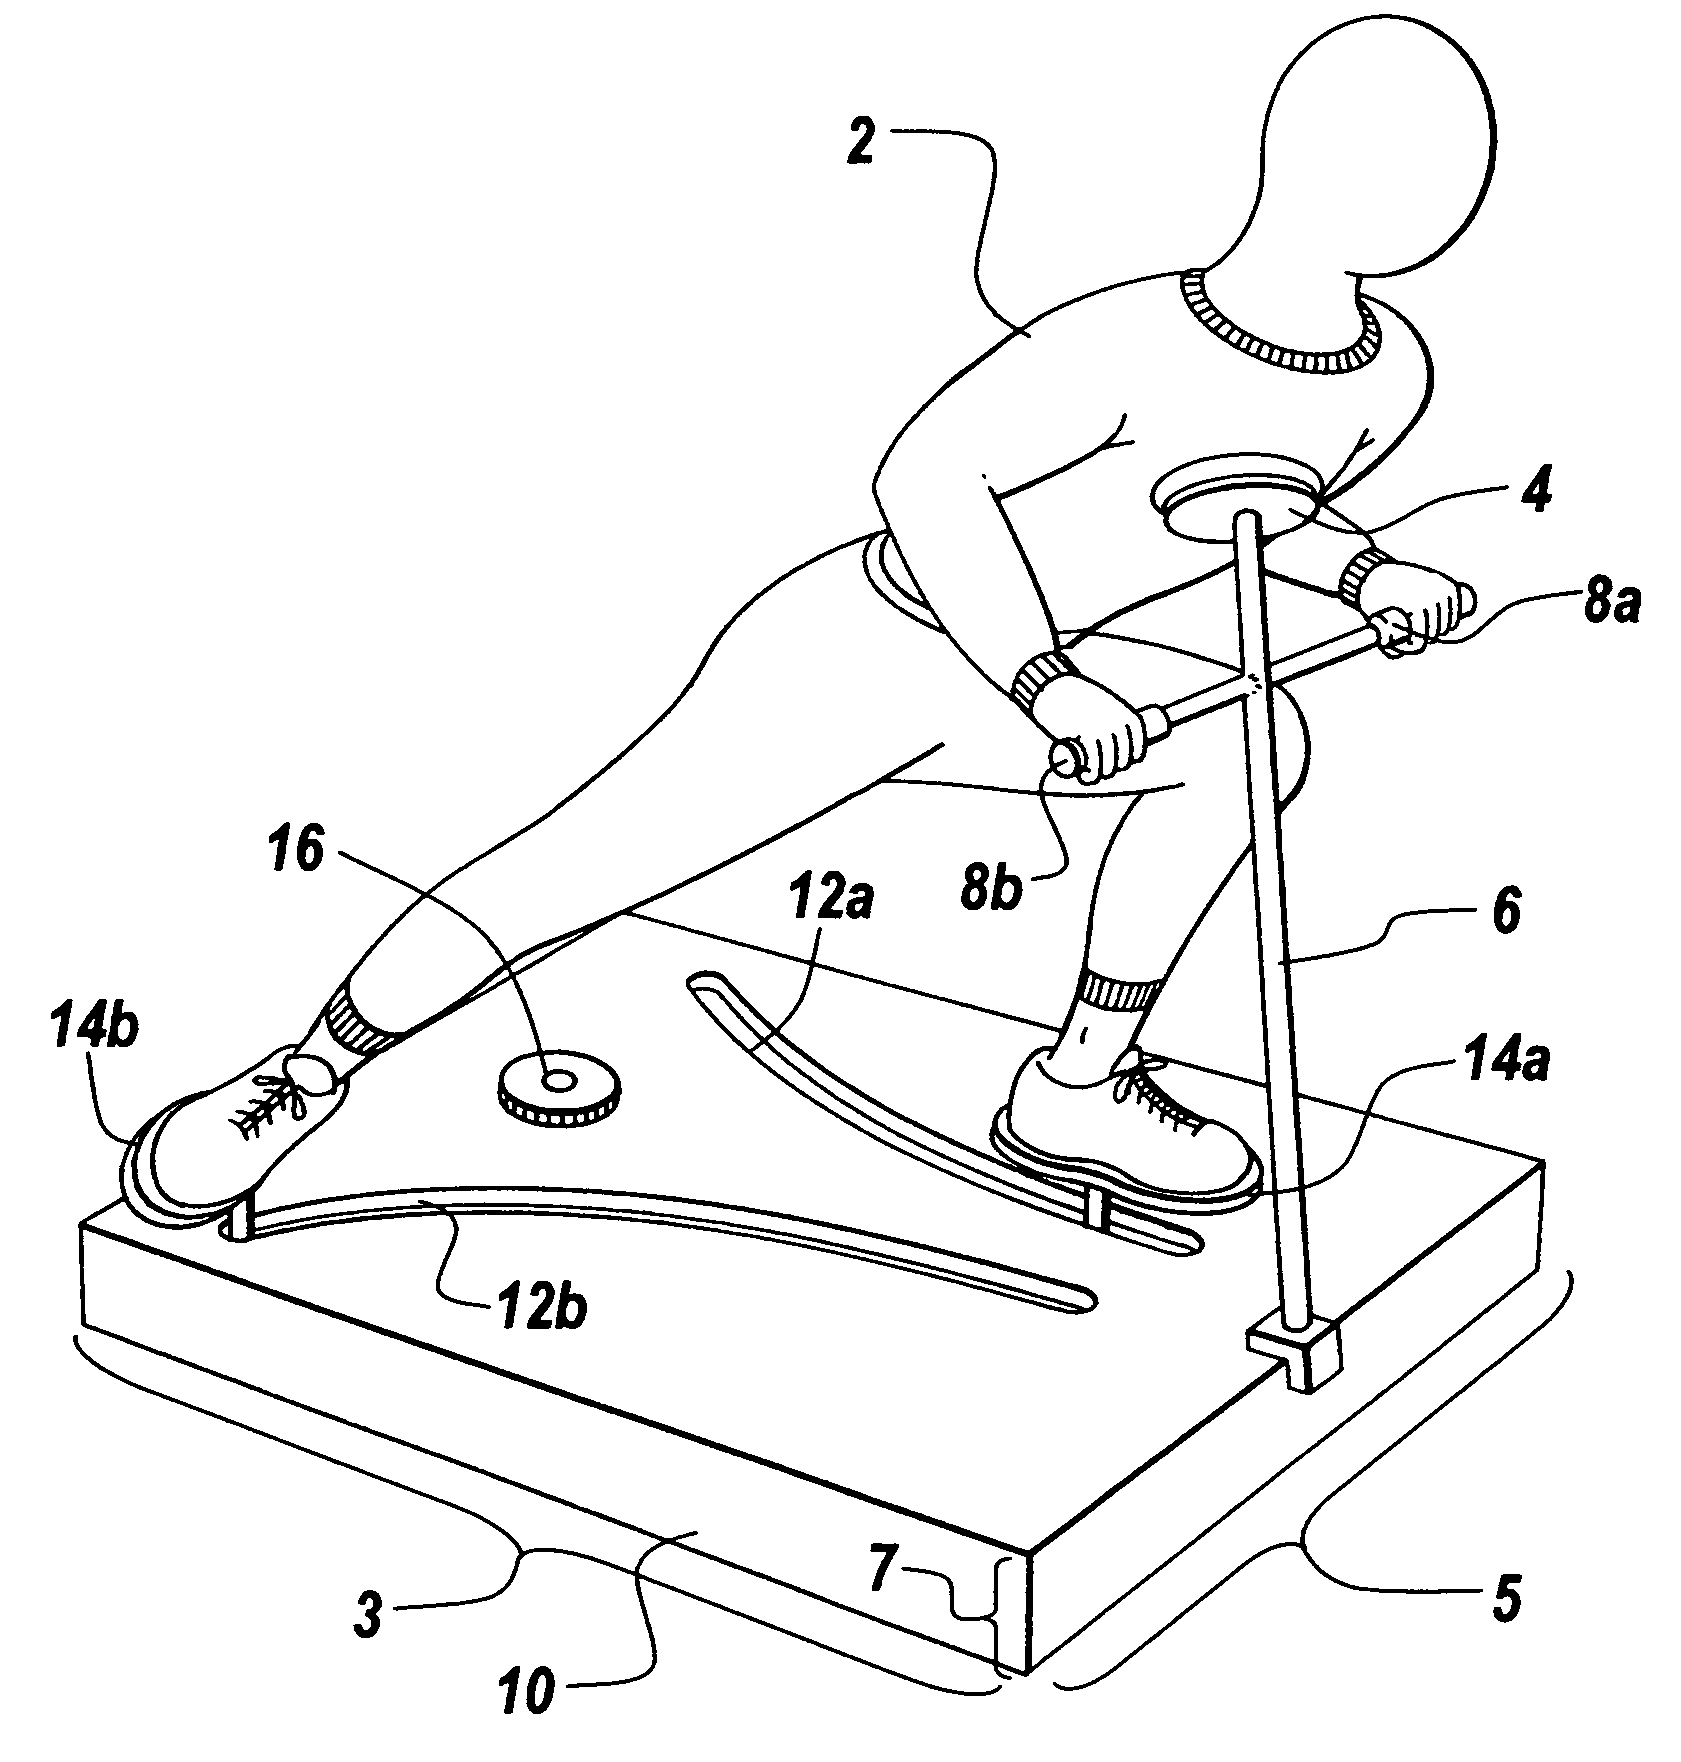 Ice skating training apparatus for playing hockey